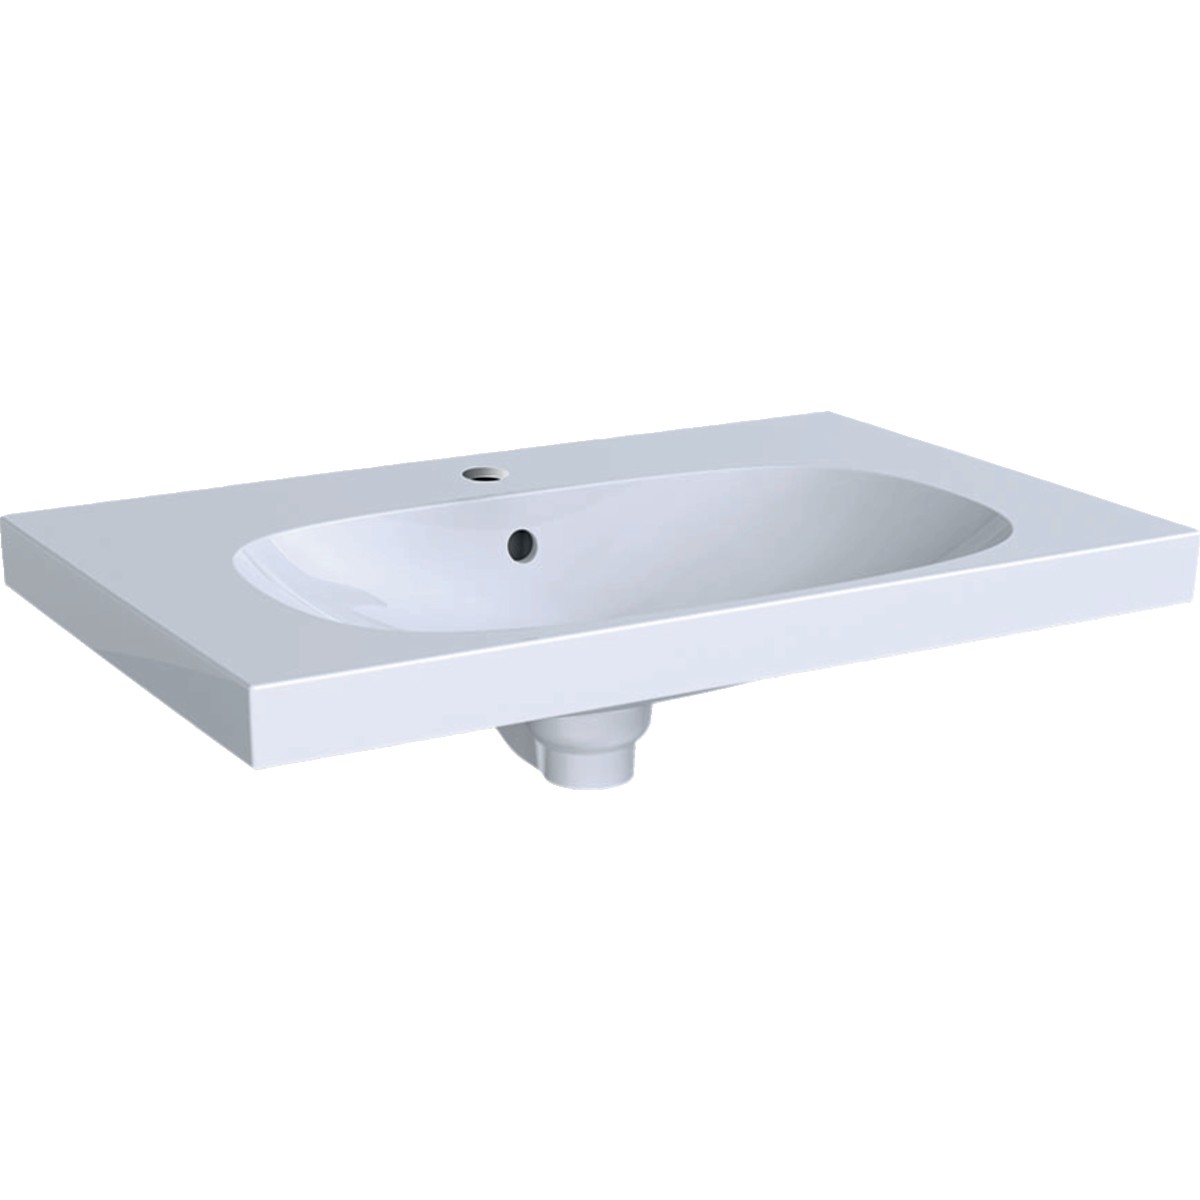 Geberit Acanto Basin 75cm One tap hole - White with Shelf Surface [500622012]